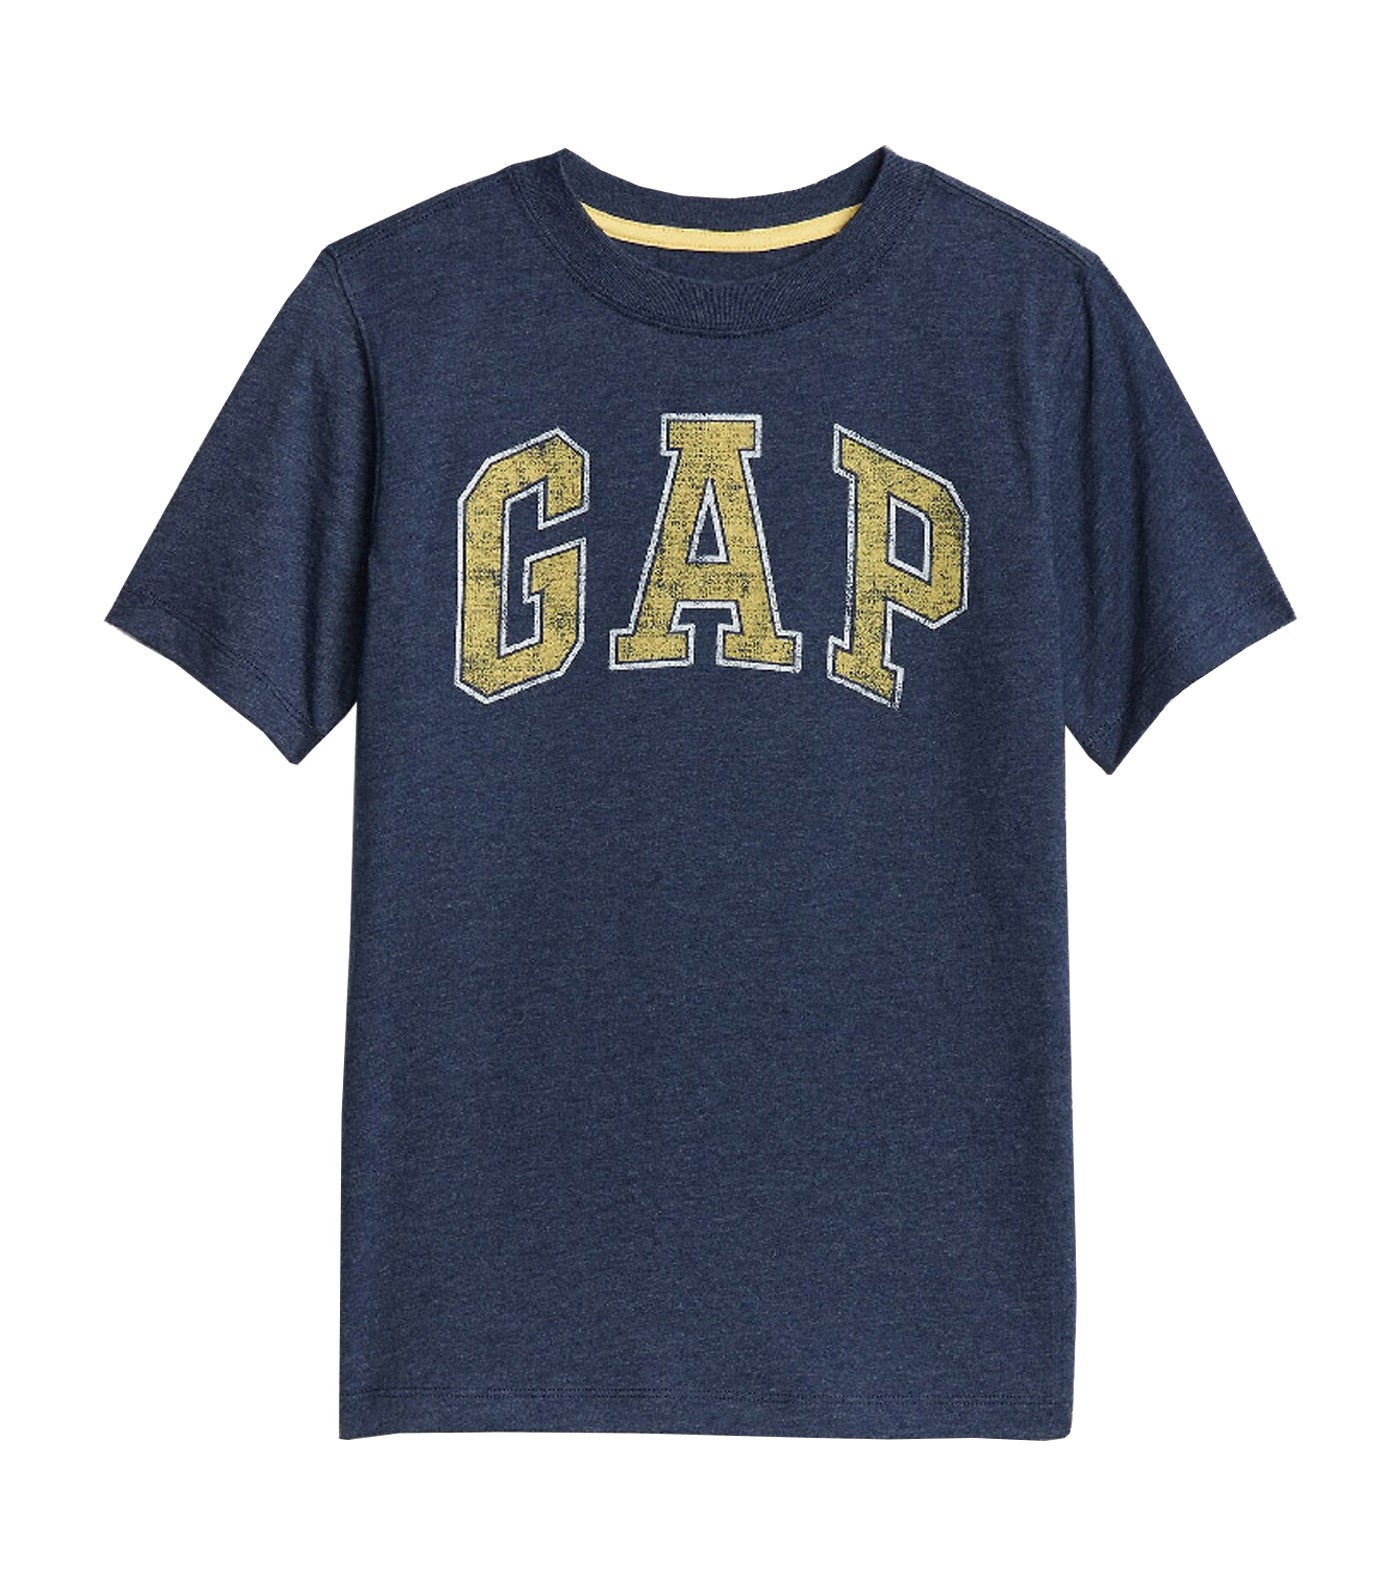 gap kids navy heather kids gap logo t-shirt